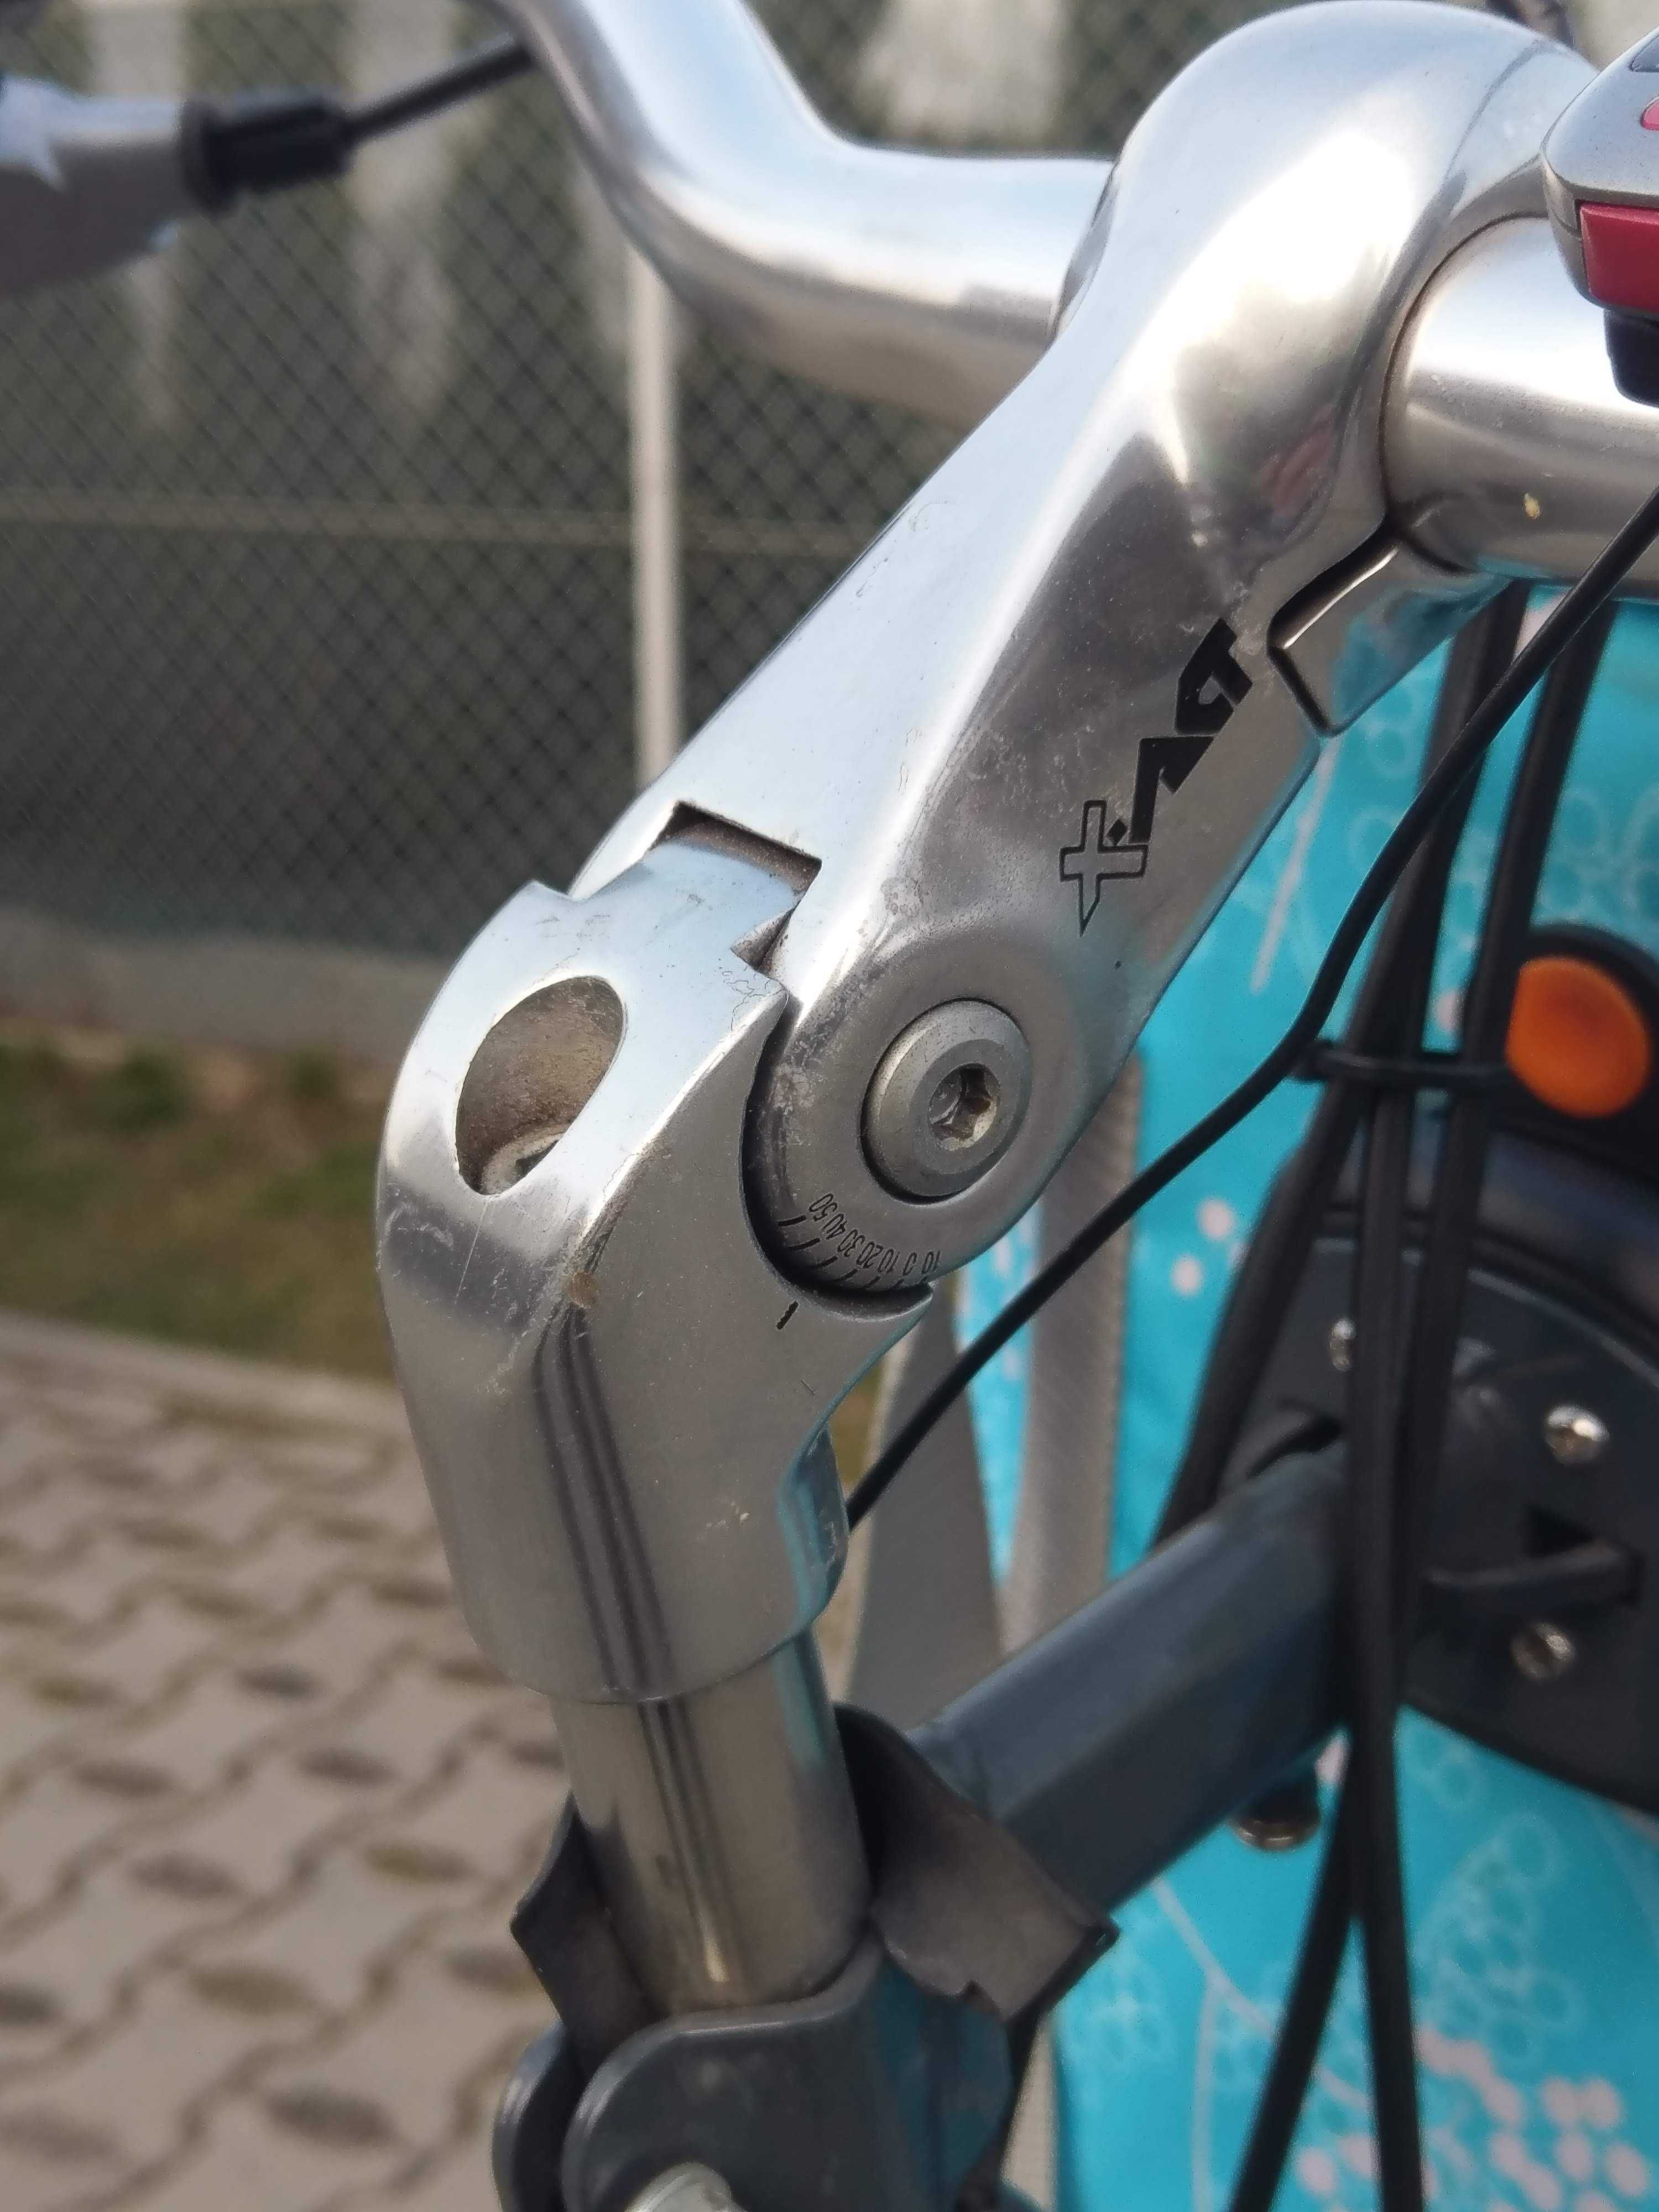 Damski holenderski rower miejski firmy RIH, rozmiar kół 28 cali